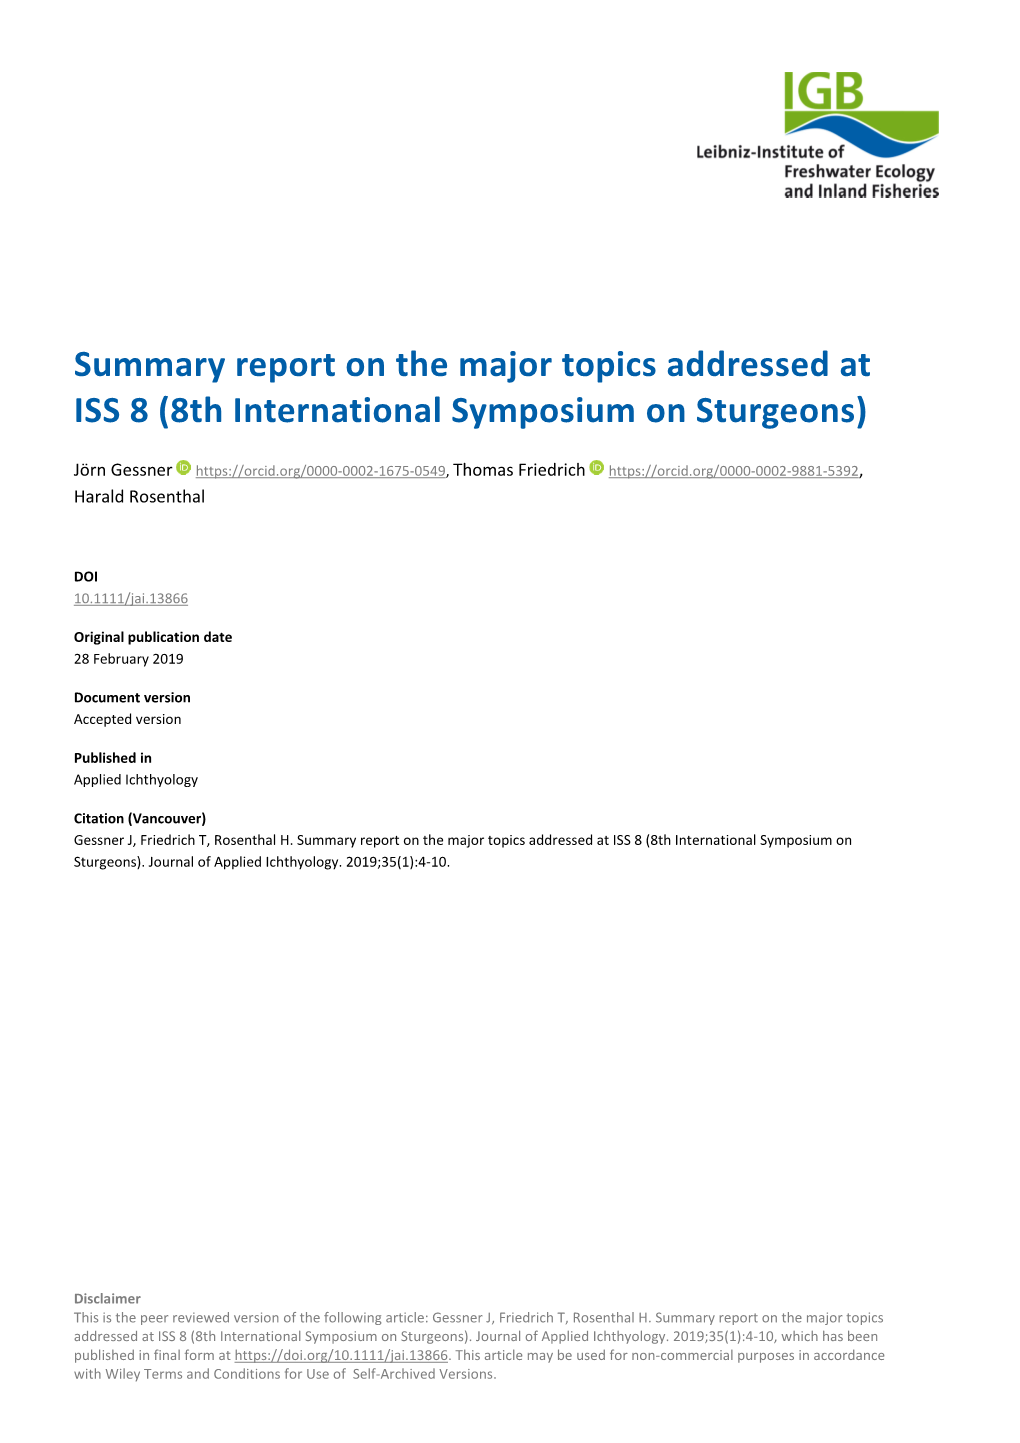 Summary Report on the Major Topics Addressed at ISS 8 (8Th International Symposium on Sturgeons)